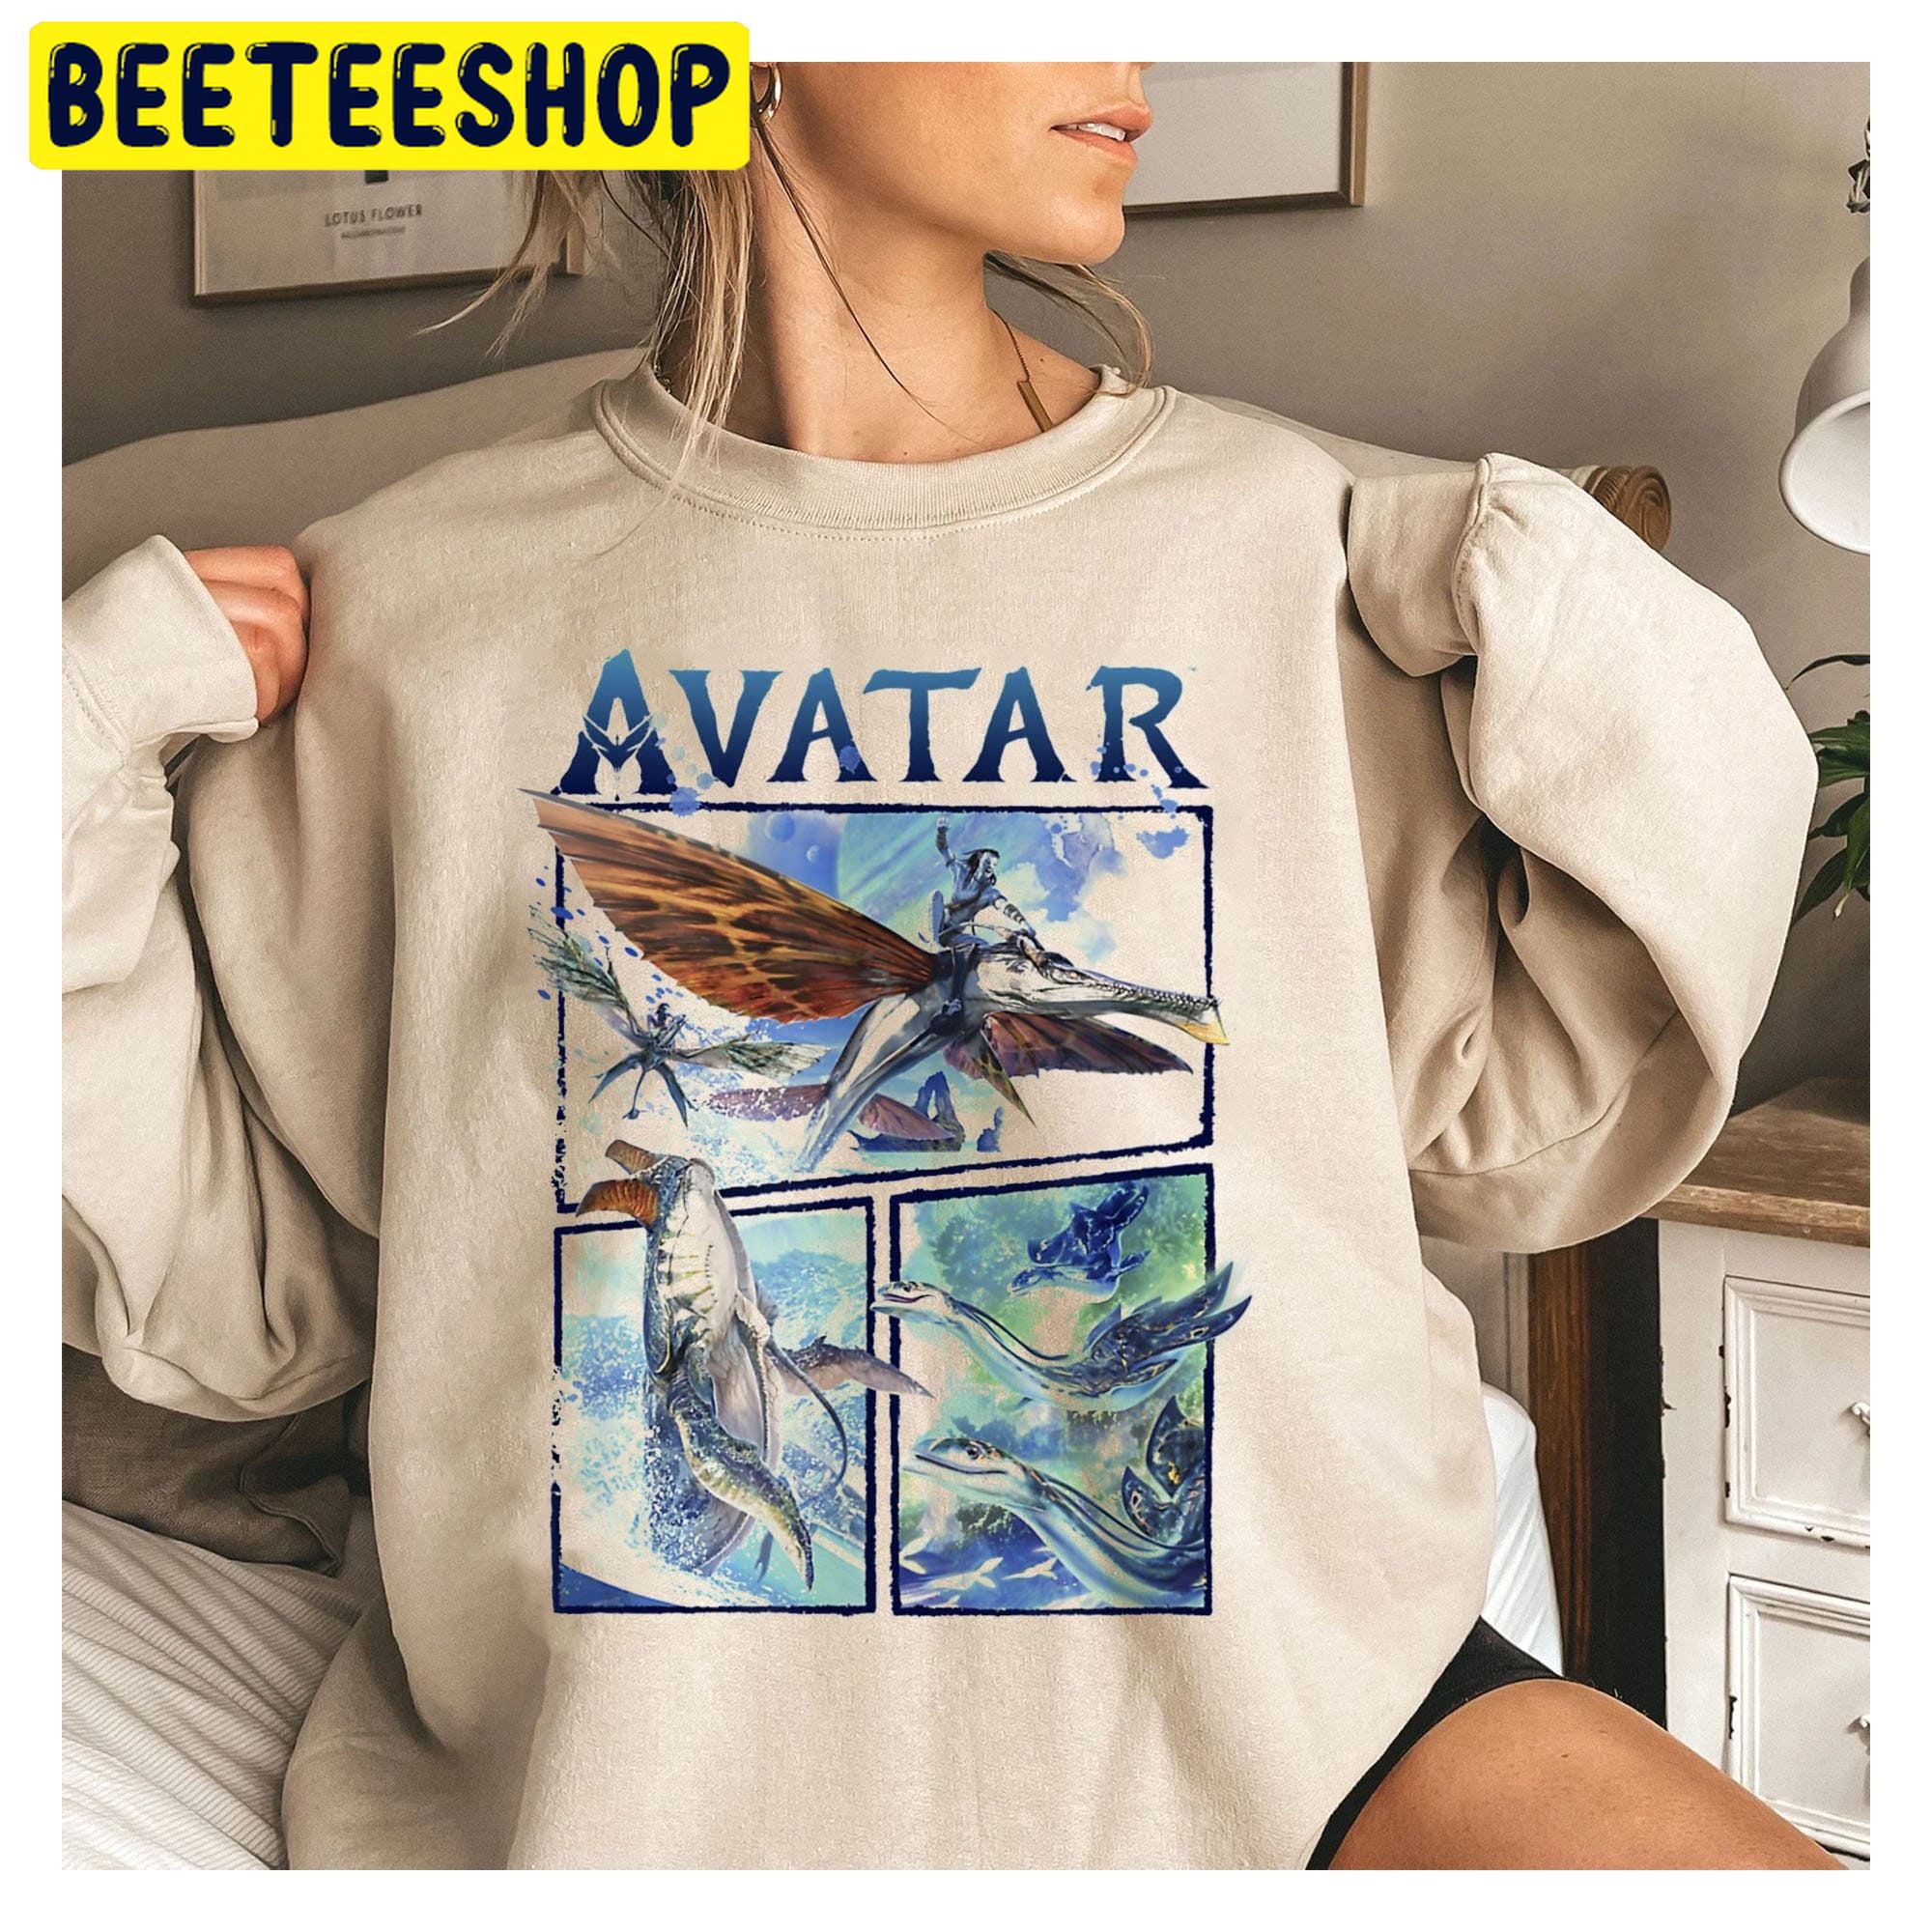 Avatar The Way of Water Hot Movie 2022 Jake Sully Trending Unisex Shirt -  Beeteeshop